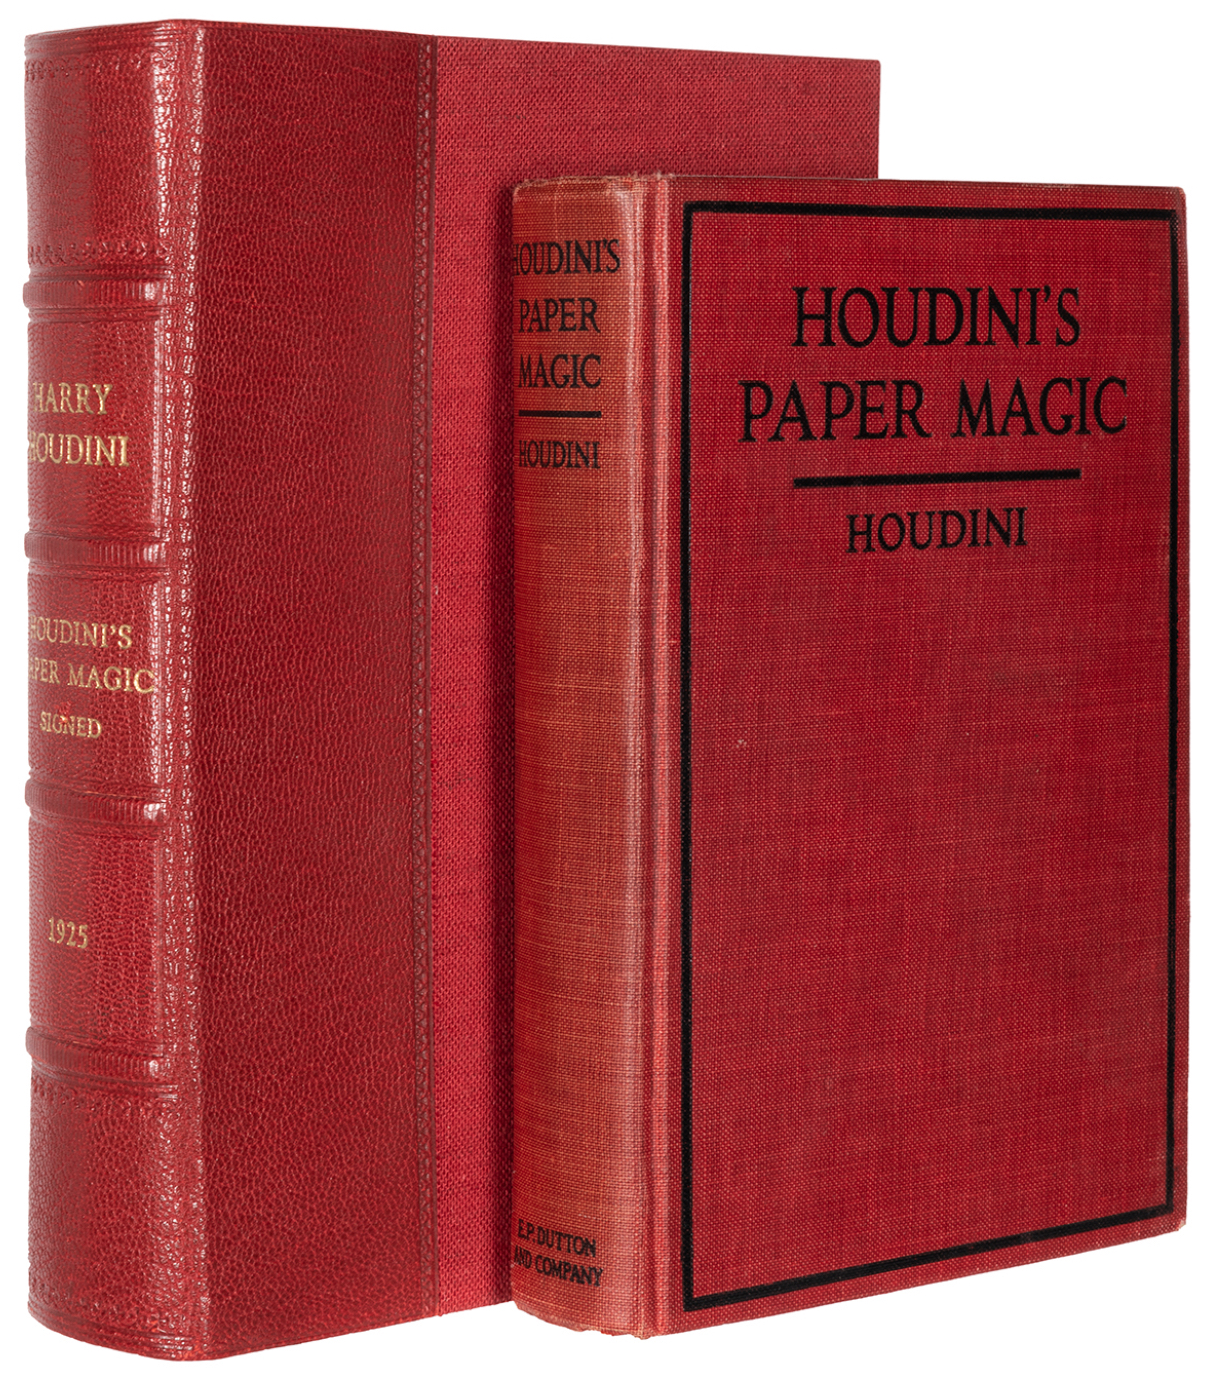 1922 inscribed second edition of Harry Houdini’s ‘Houdini’s Paper Magic,’ est. $1,500-$2,000